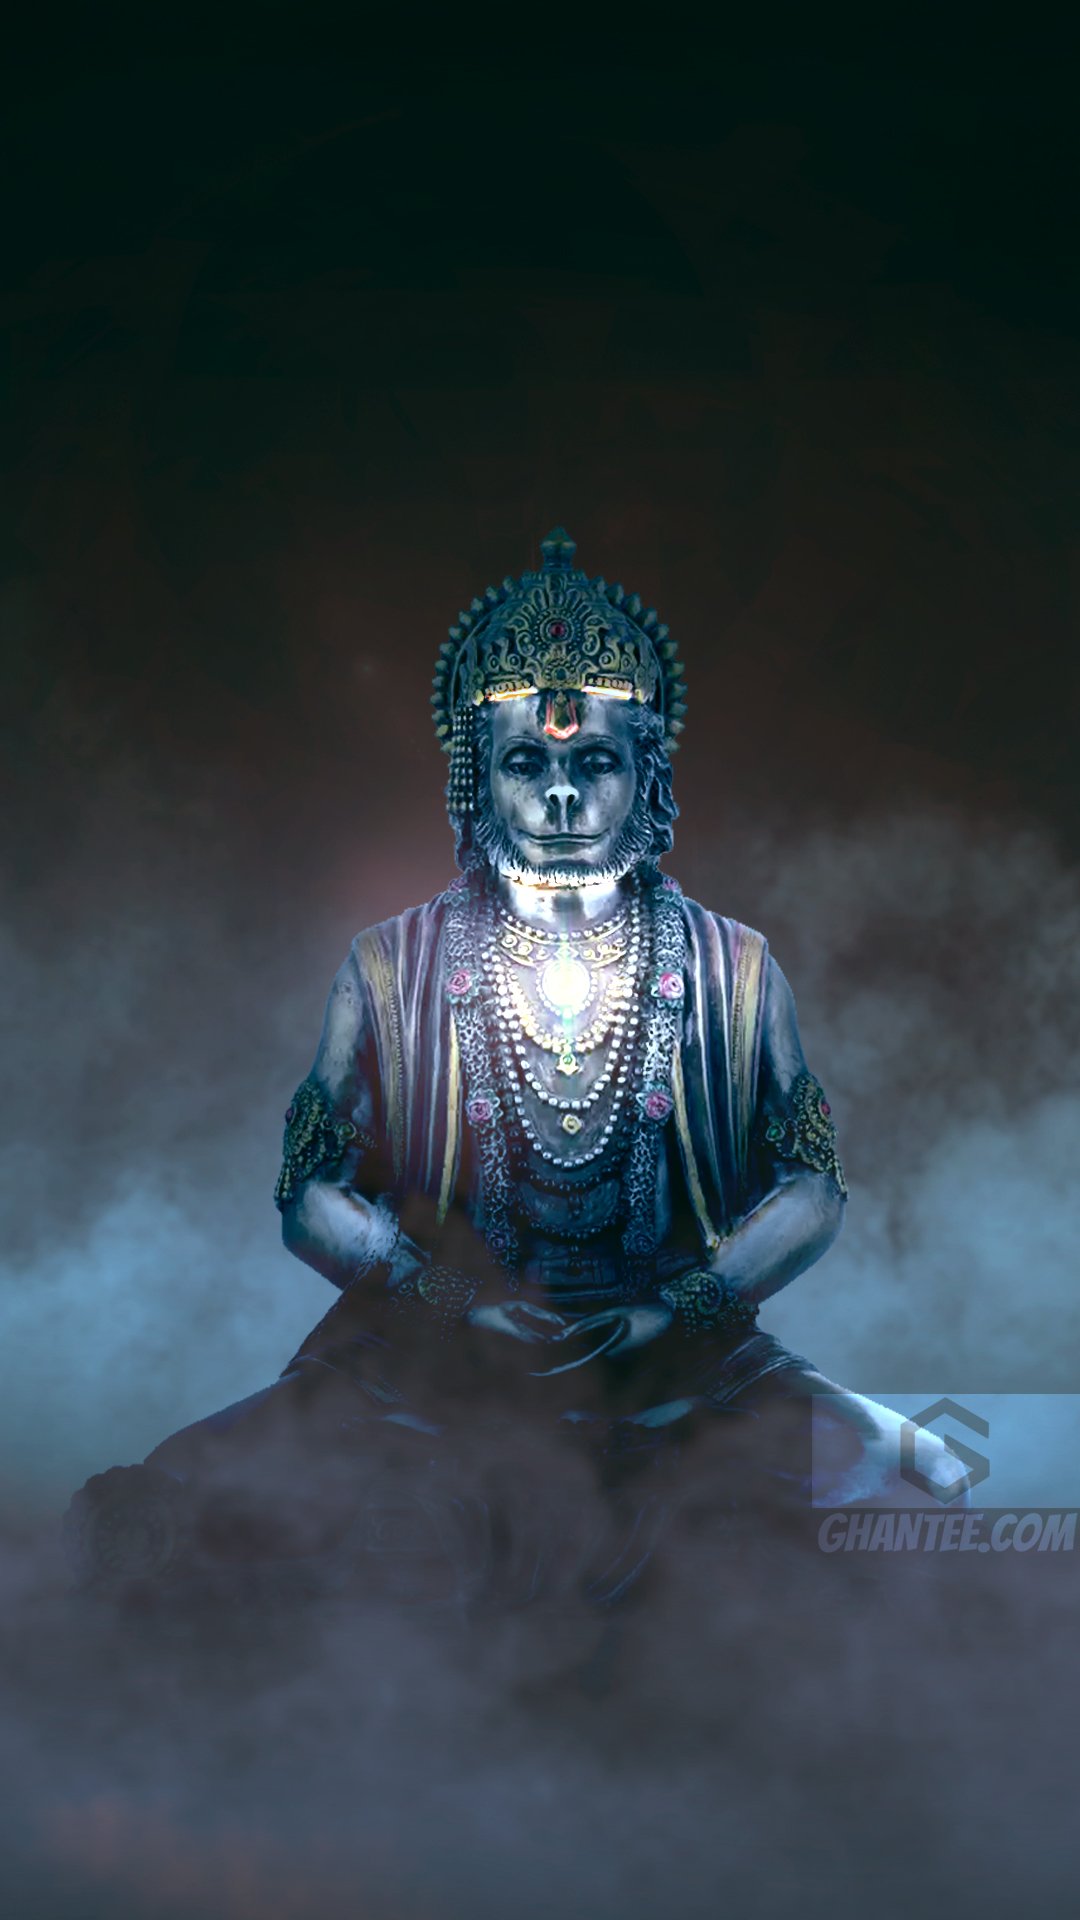 Best images of lord hanuman